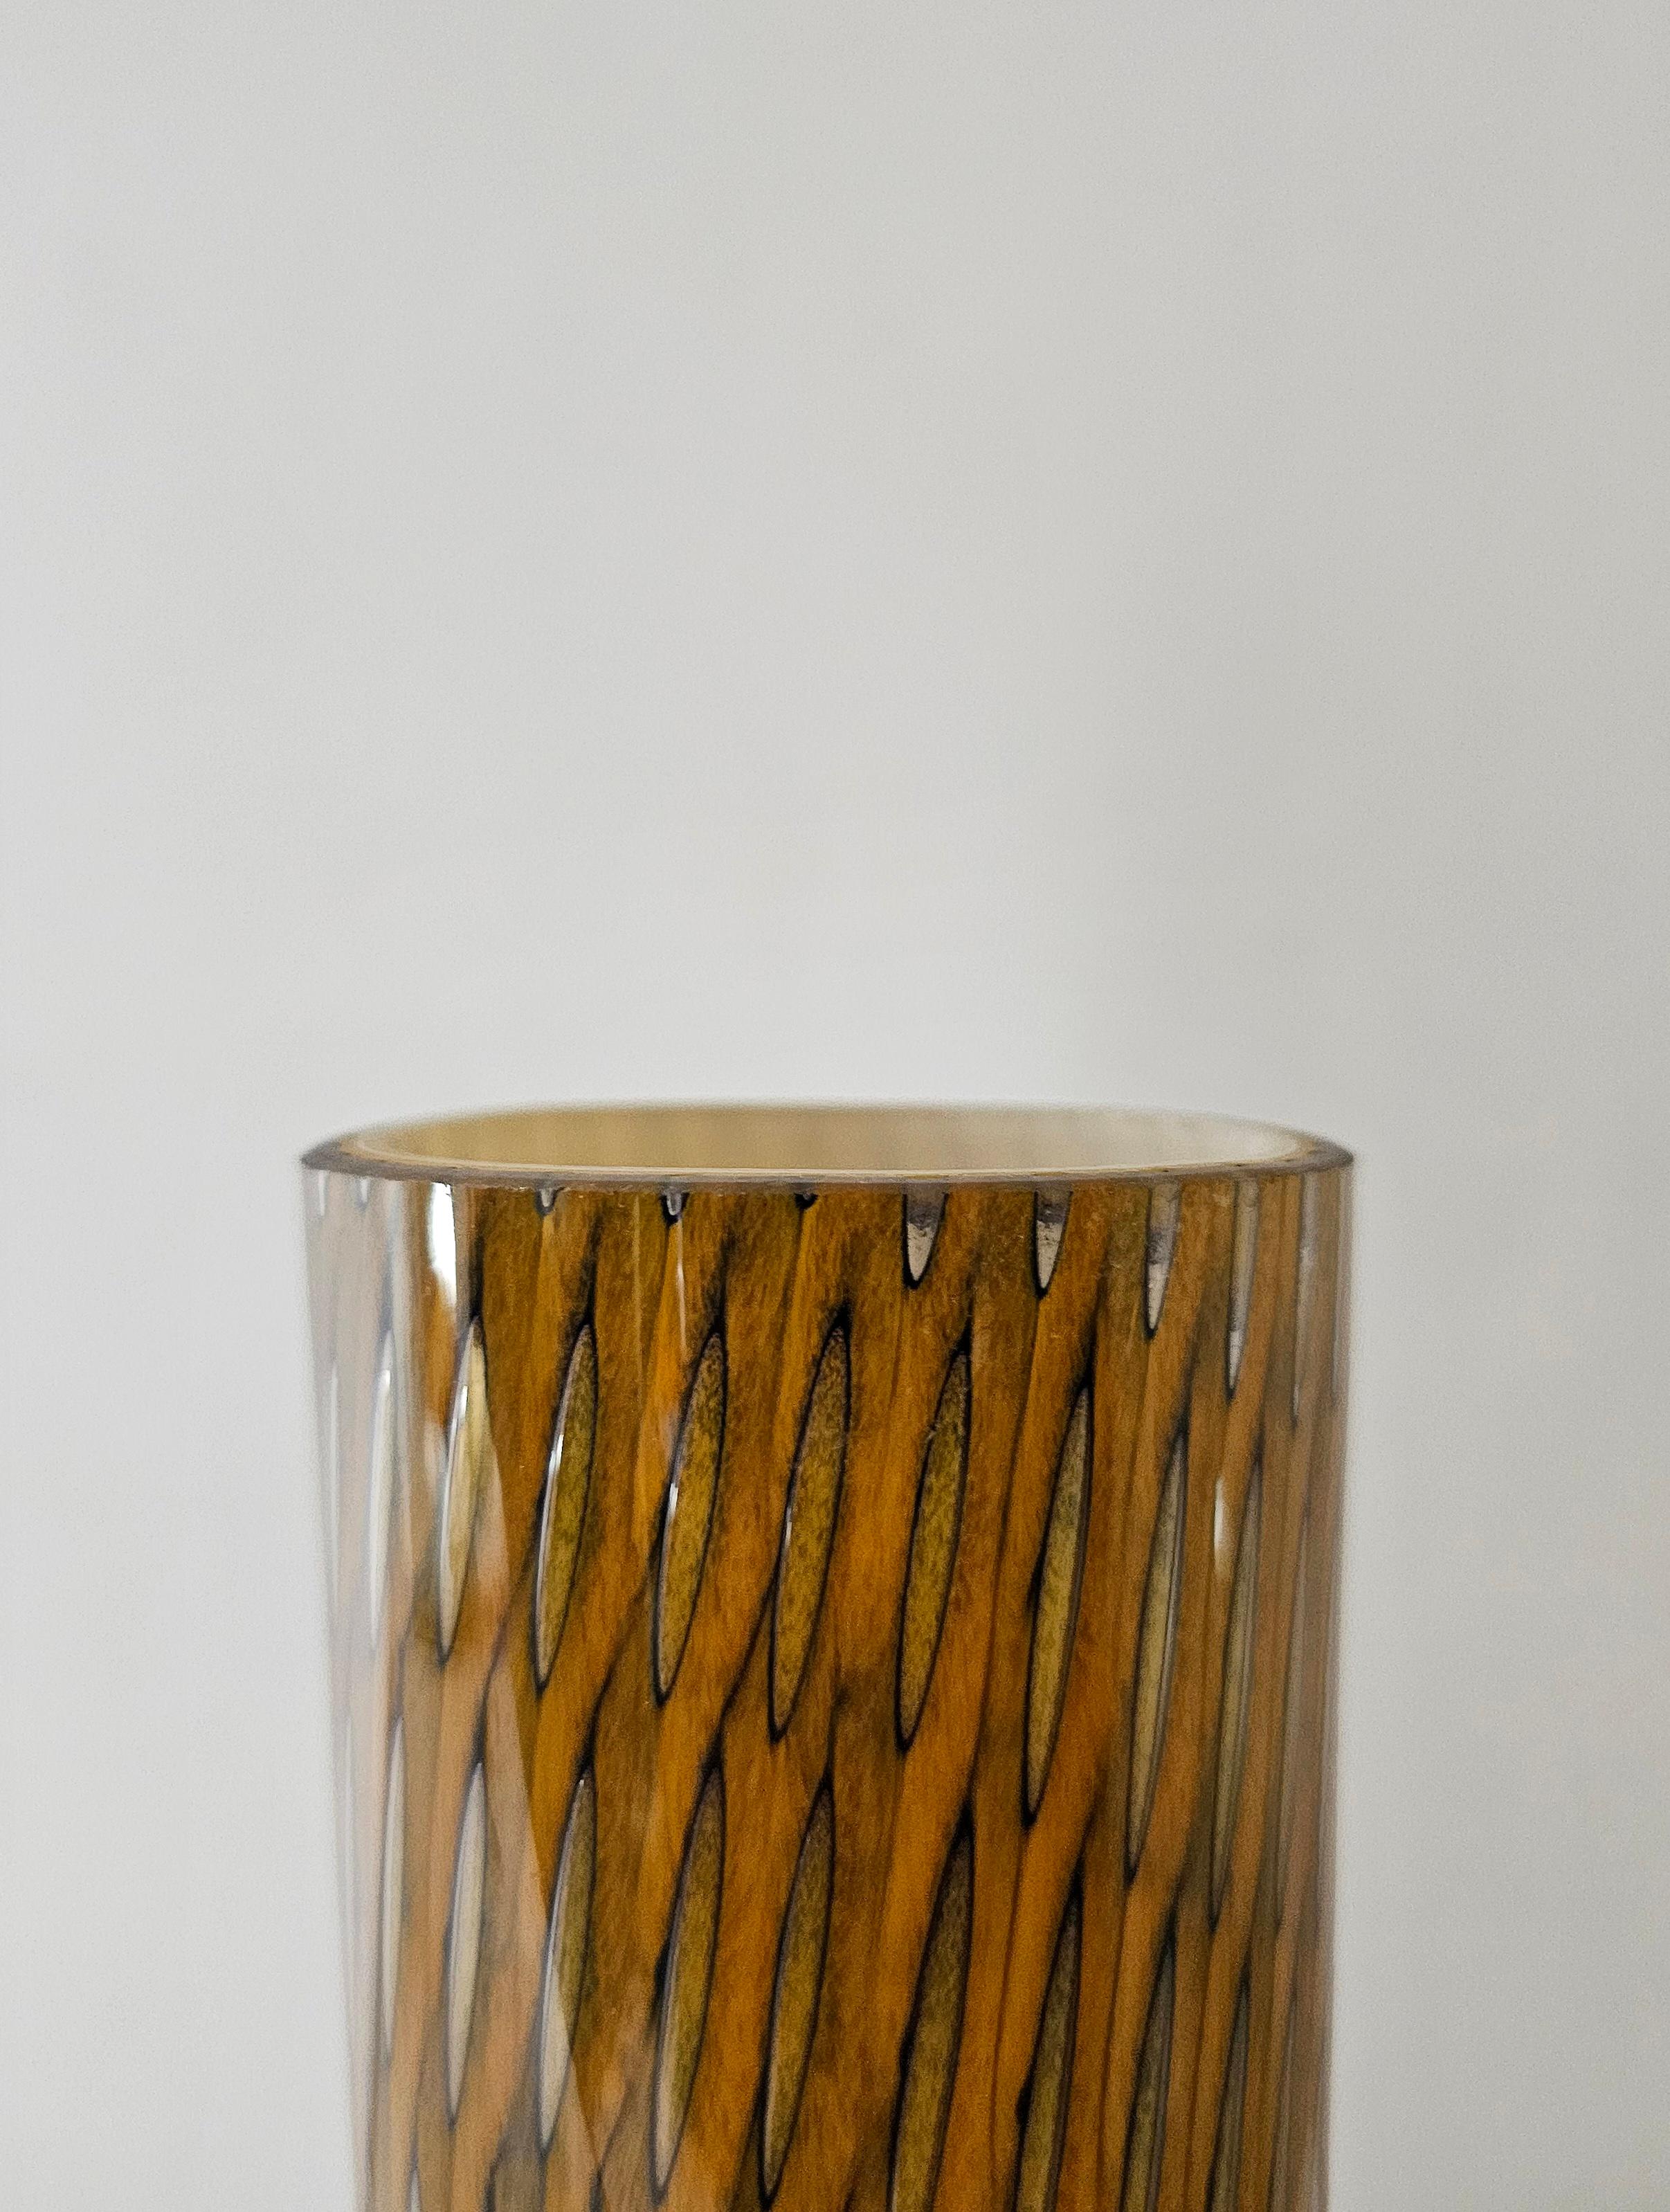 Vase Decorative Object Murano Glass Decorated Midcentury Italian Design 1970s For Sale 1